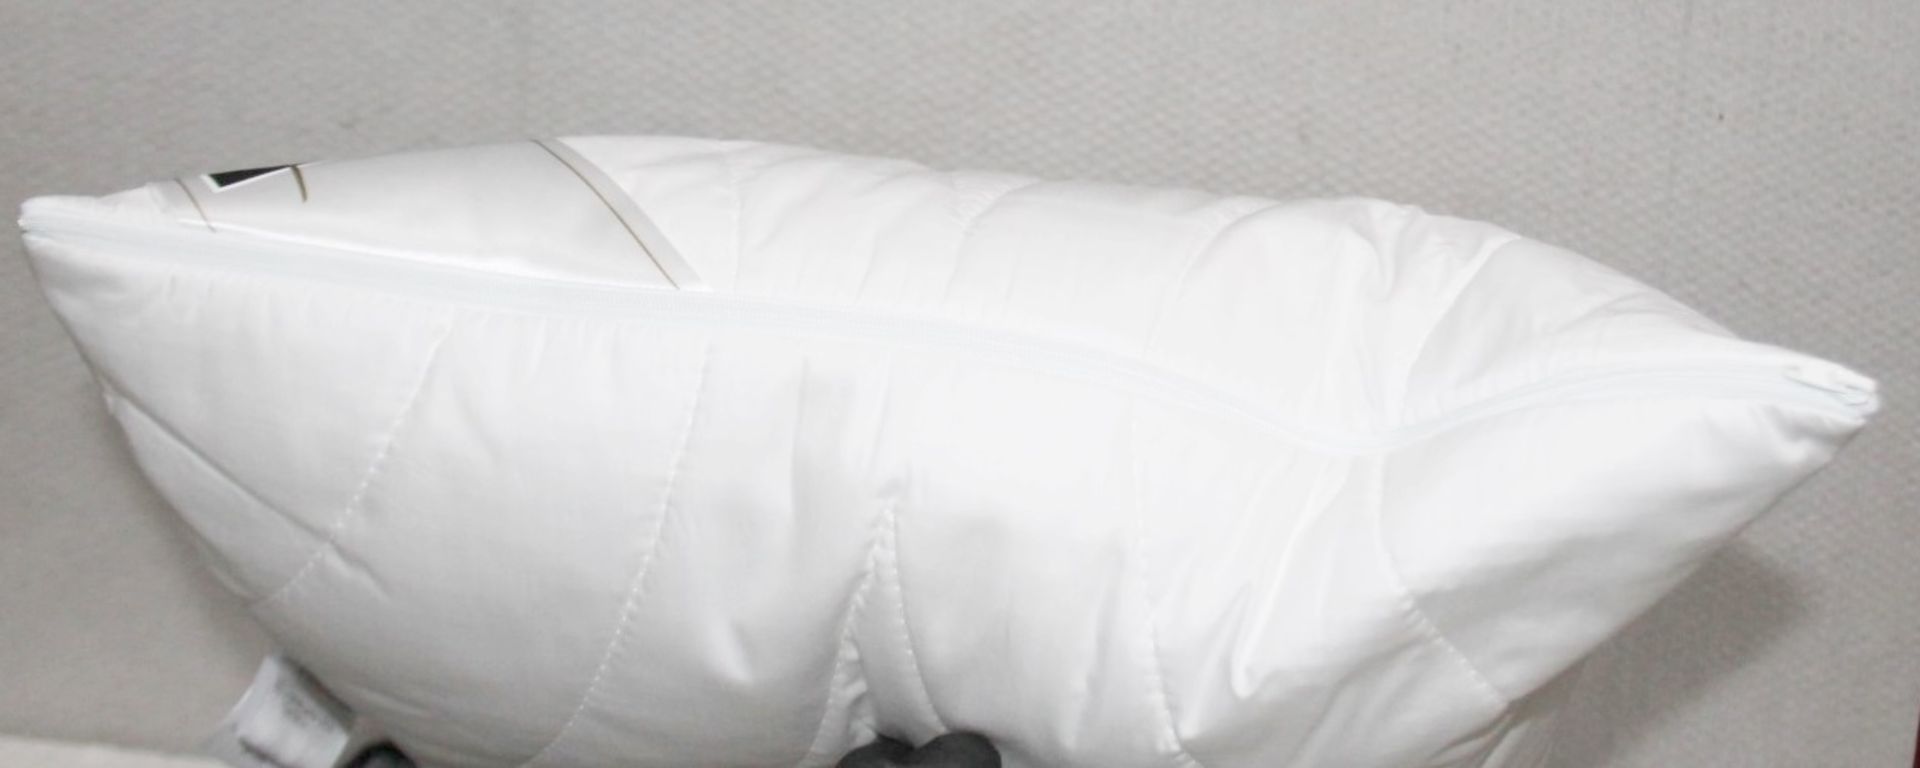 1 x BRINKHAUS 'Climasoft Outlast' Luxury Pillow (Medium Firmness) - Dimensions: 50cm x 75cm - - Image 7 of 9